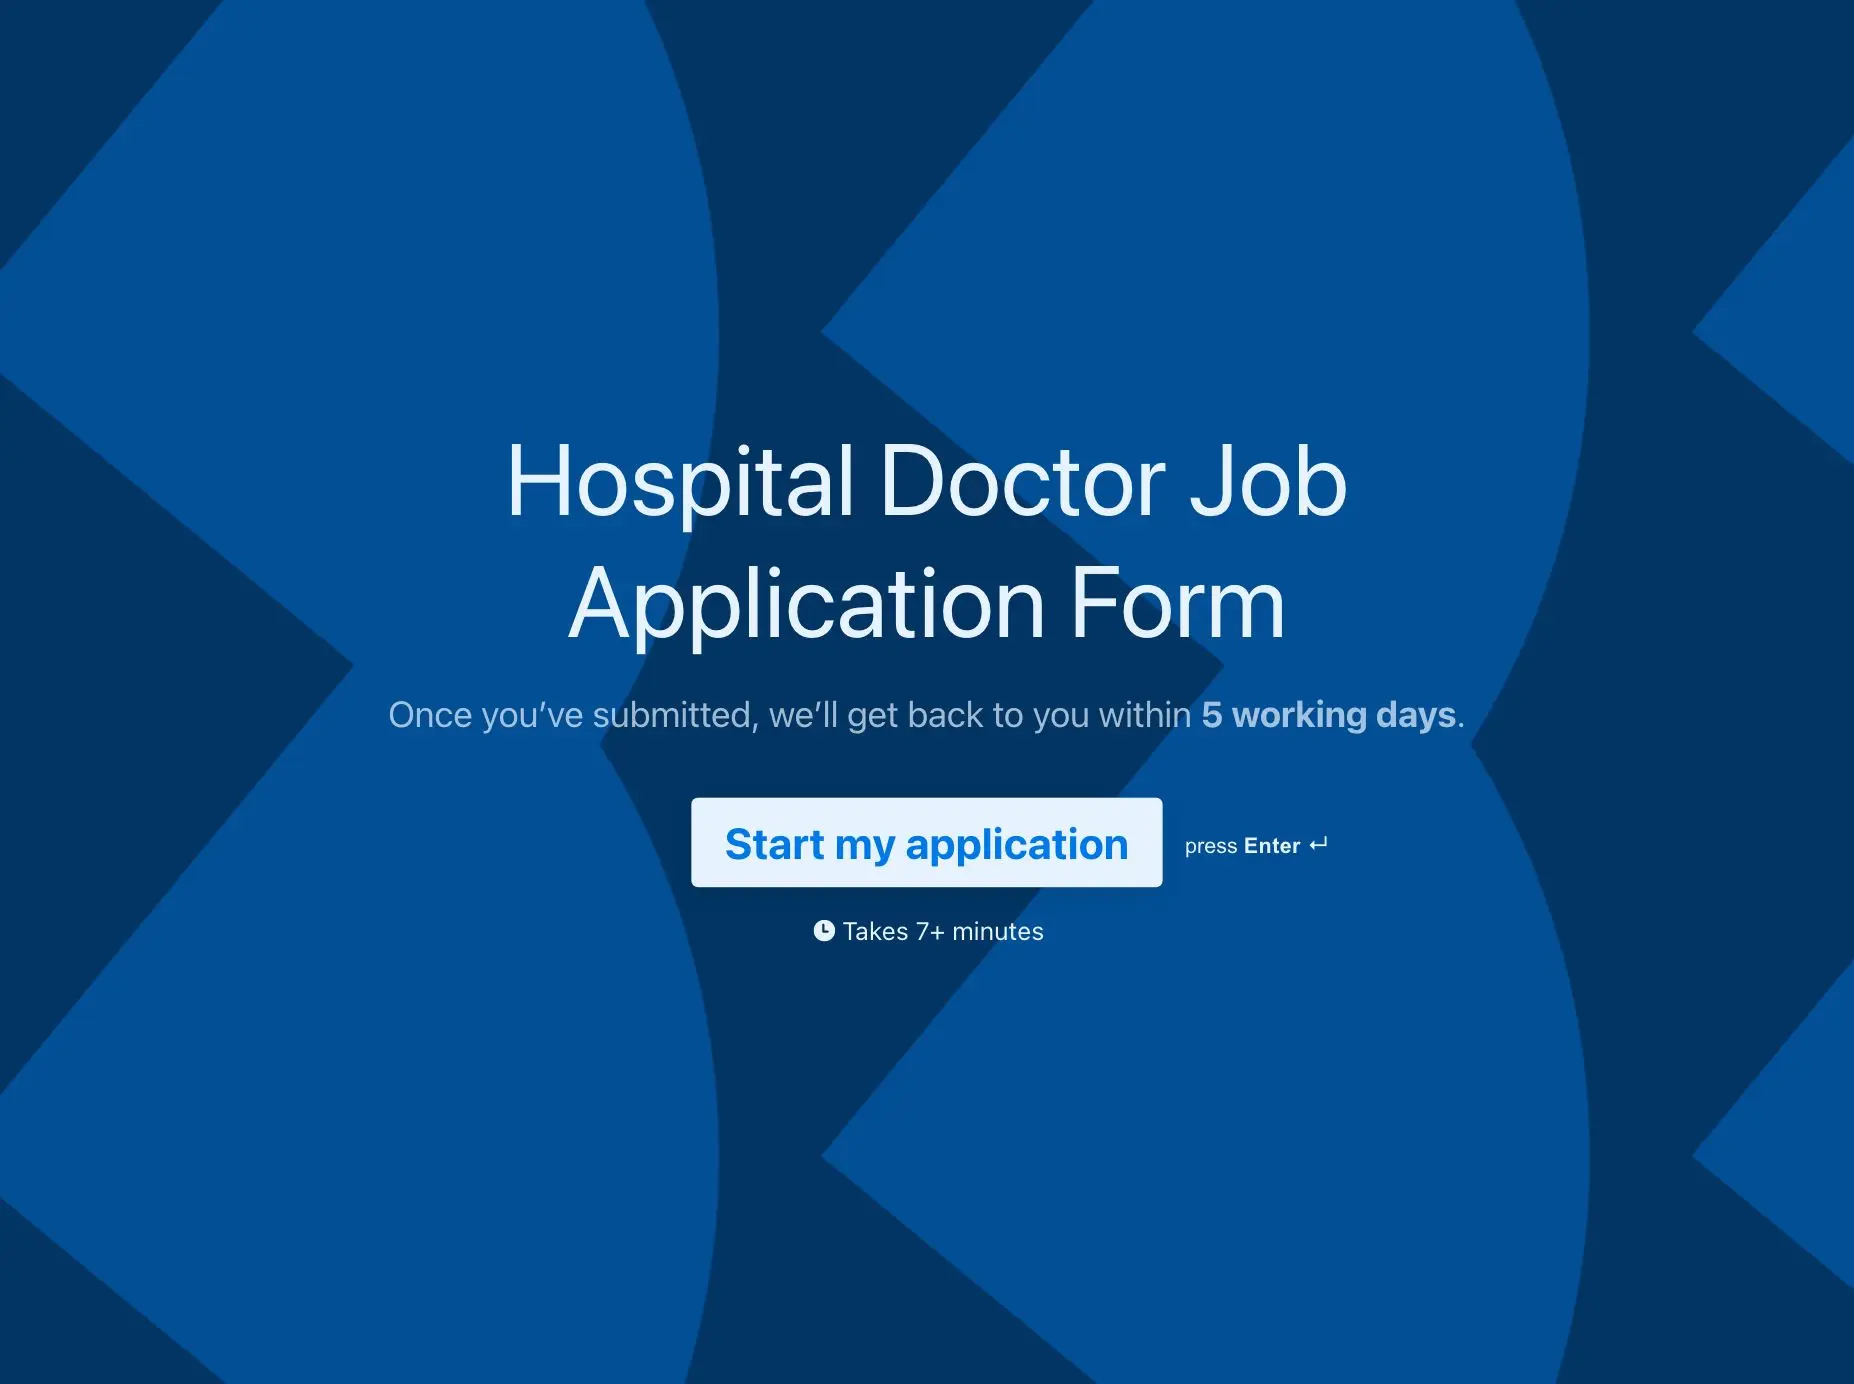 Hospital Doctor Job Application Form Template Hero